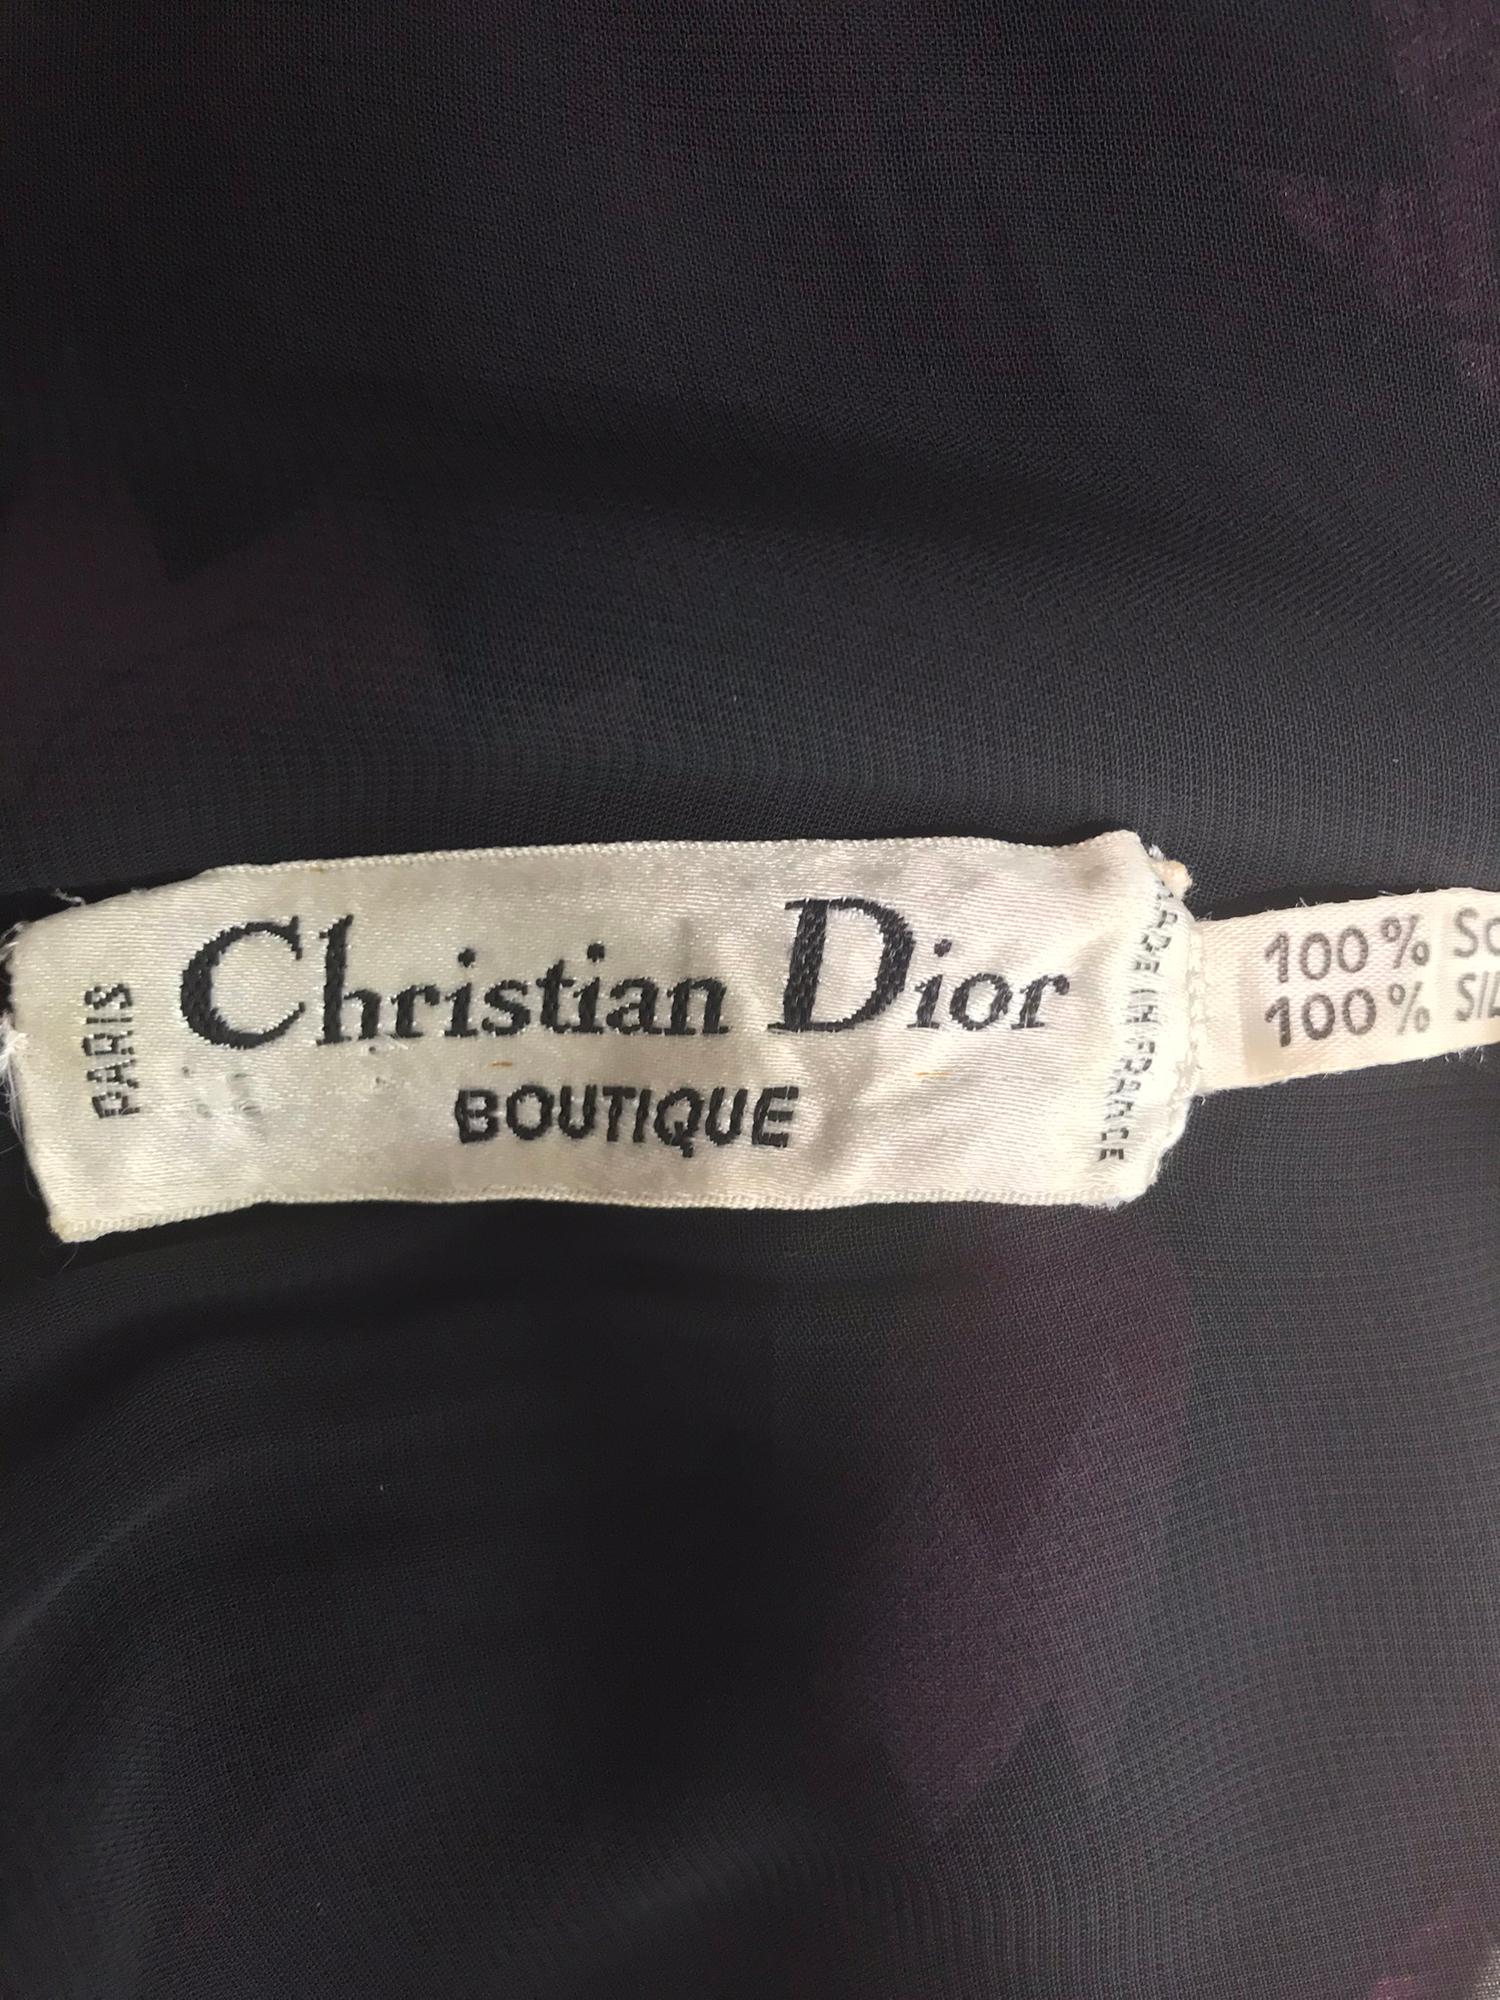 Christian Dior Boutique Paris Tulip print Strapless layered  Maxi Dress 1970s 10